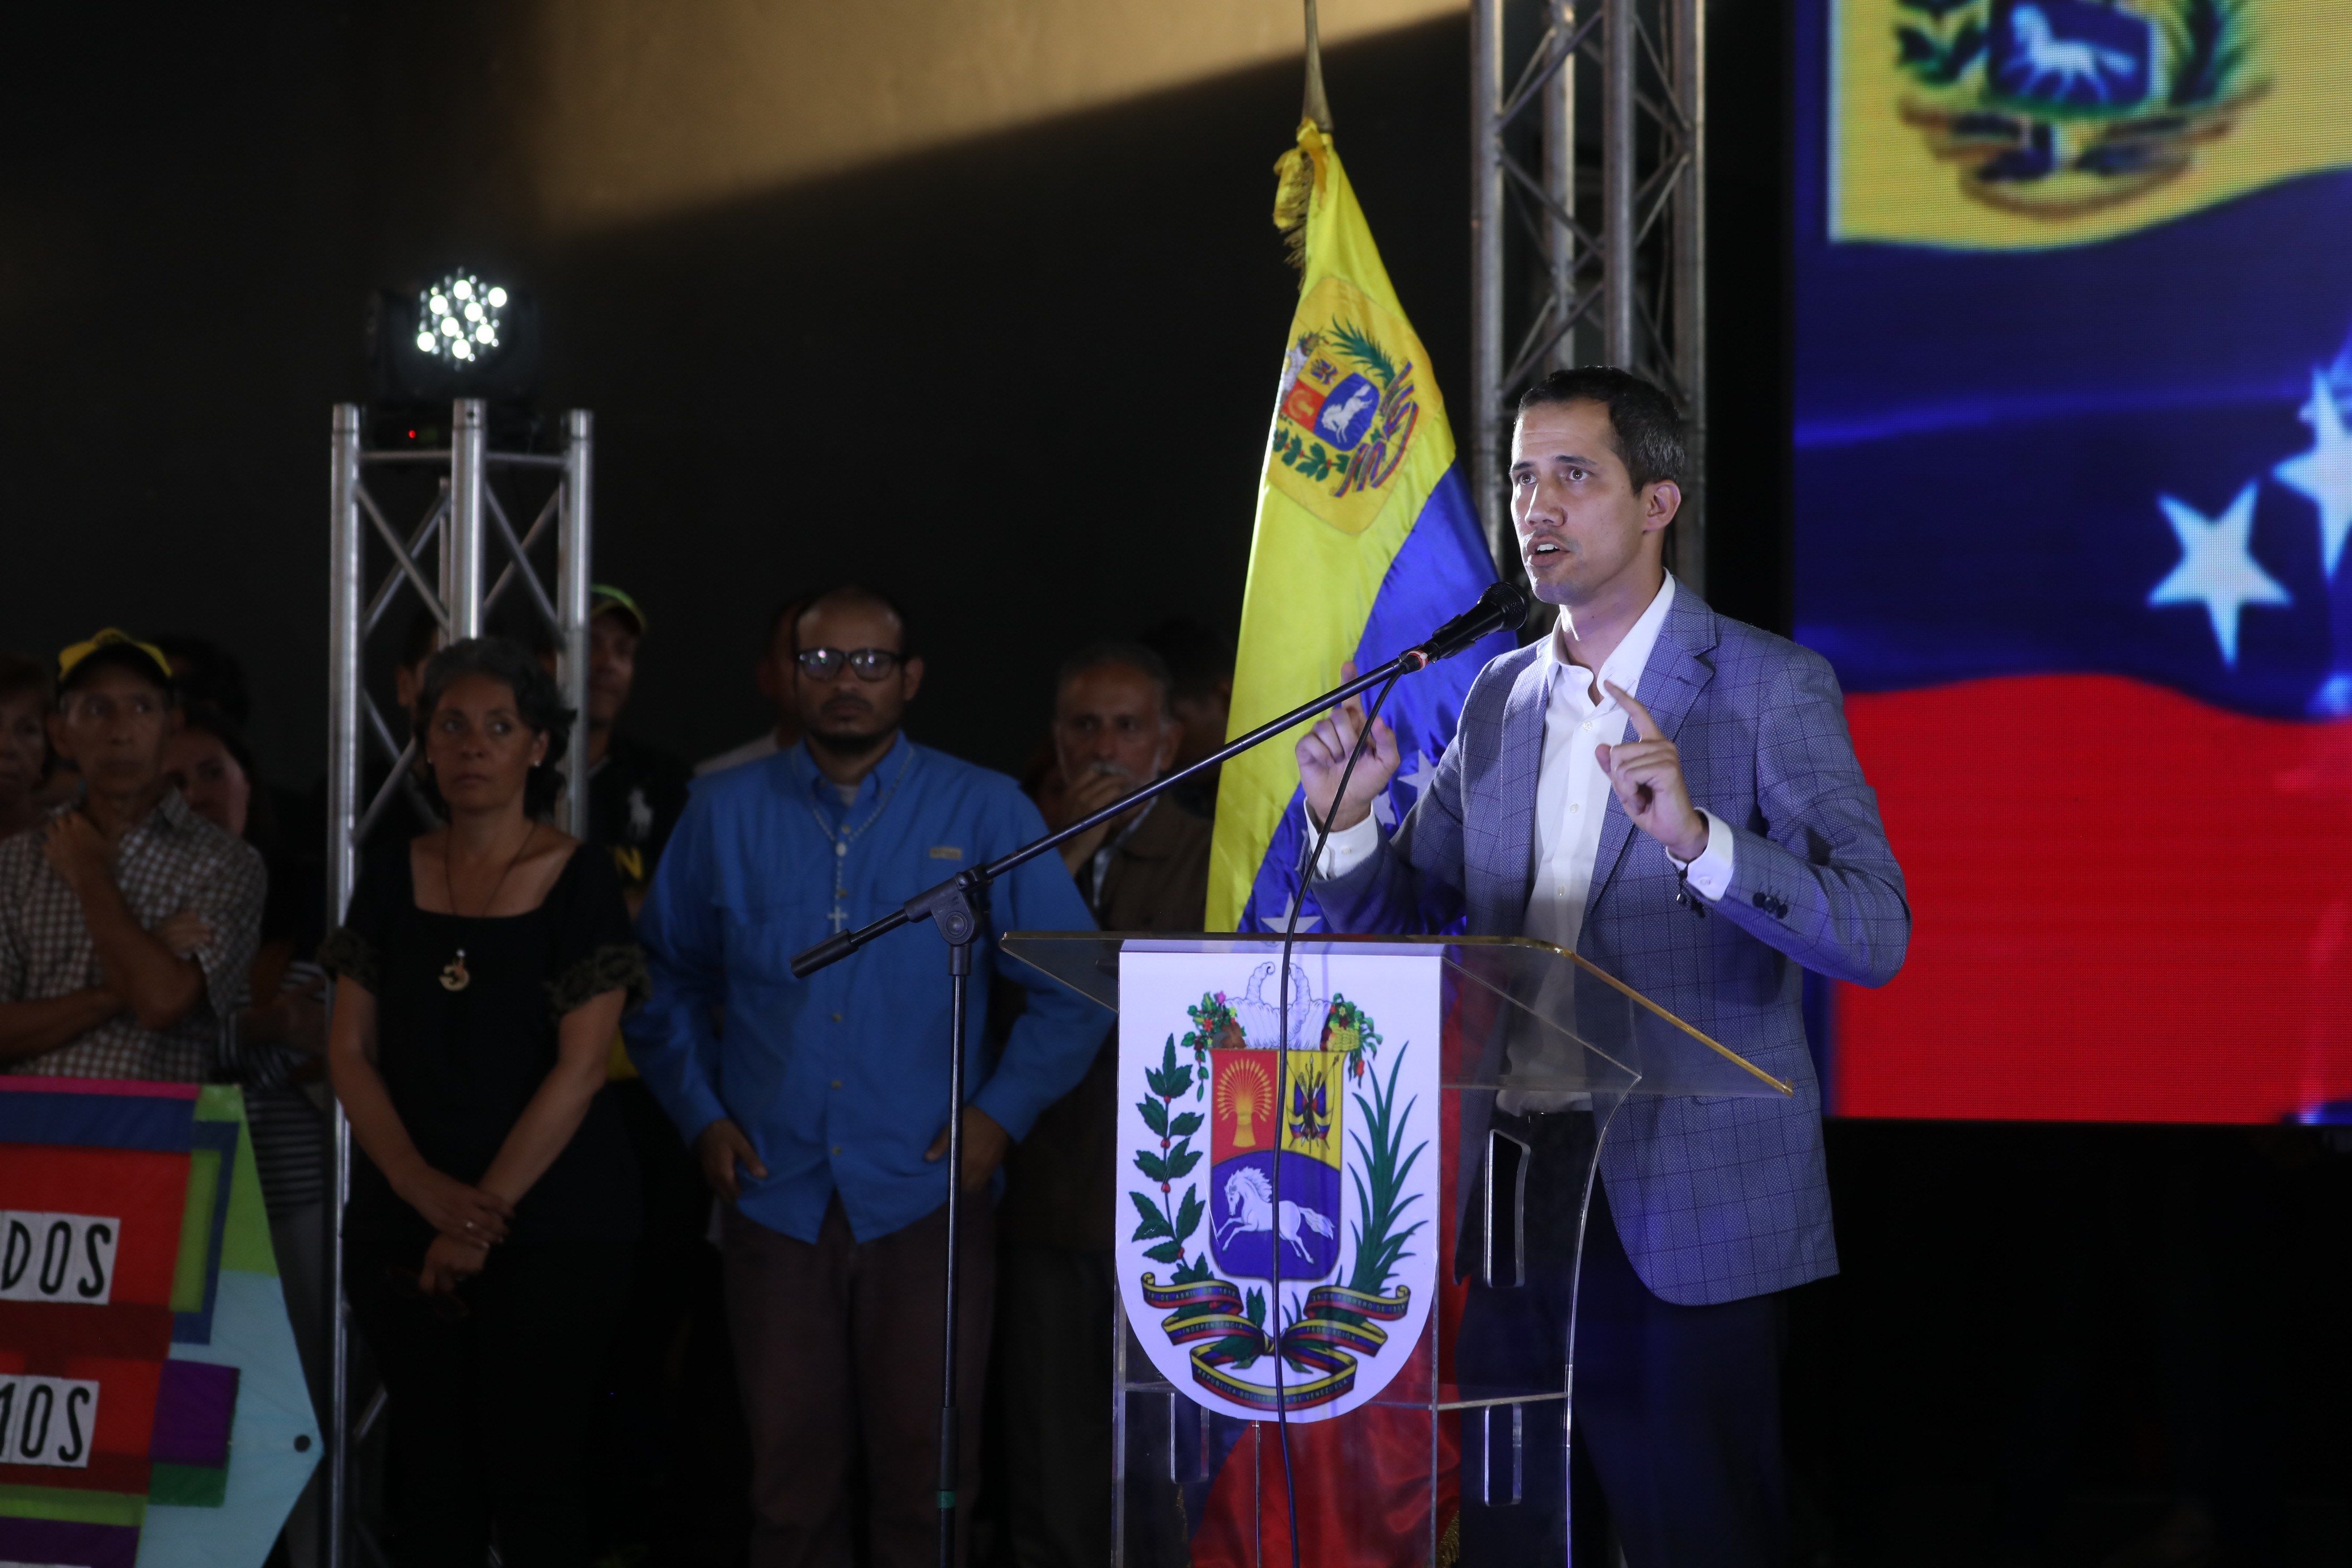  Exiliados instan a Guaidó a que pida “intervención humanitaria” en Venezuela